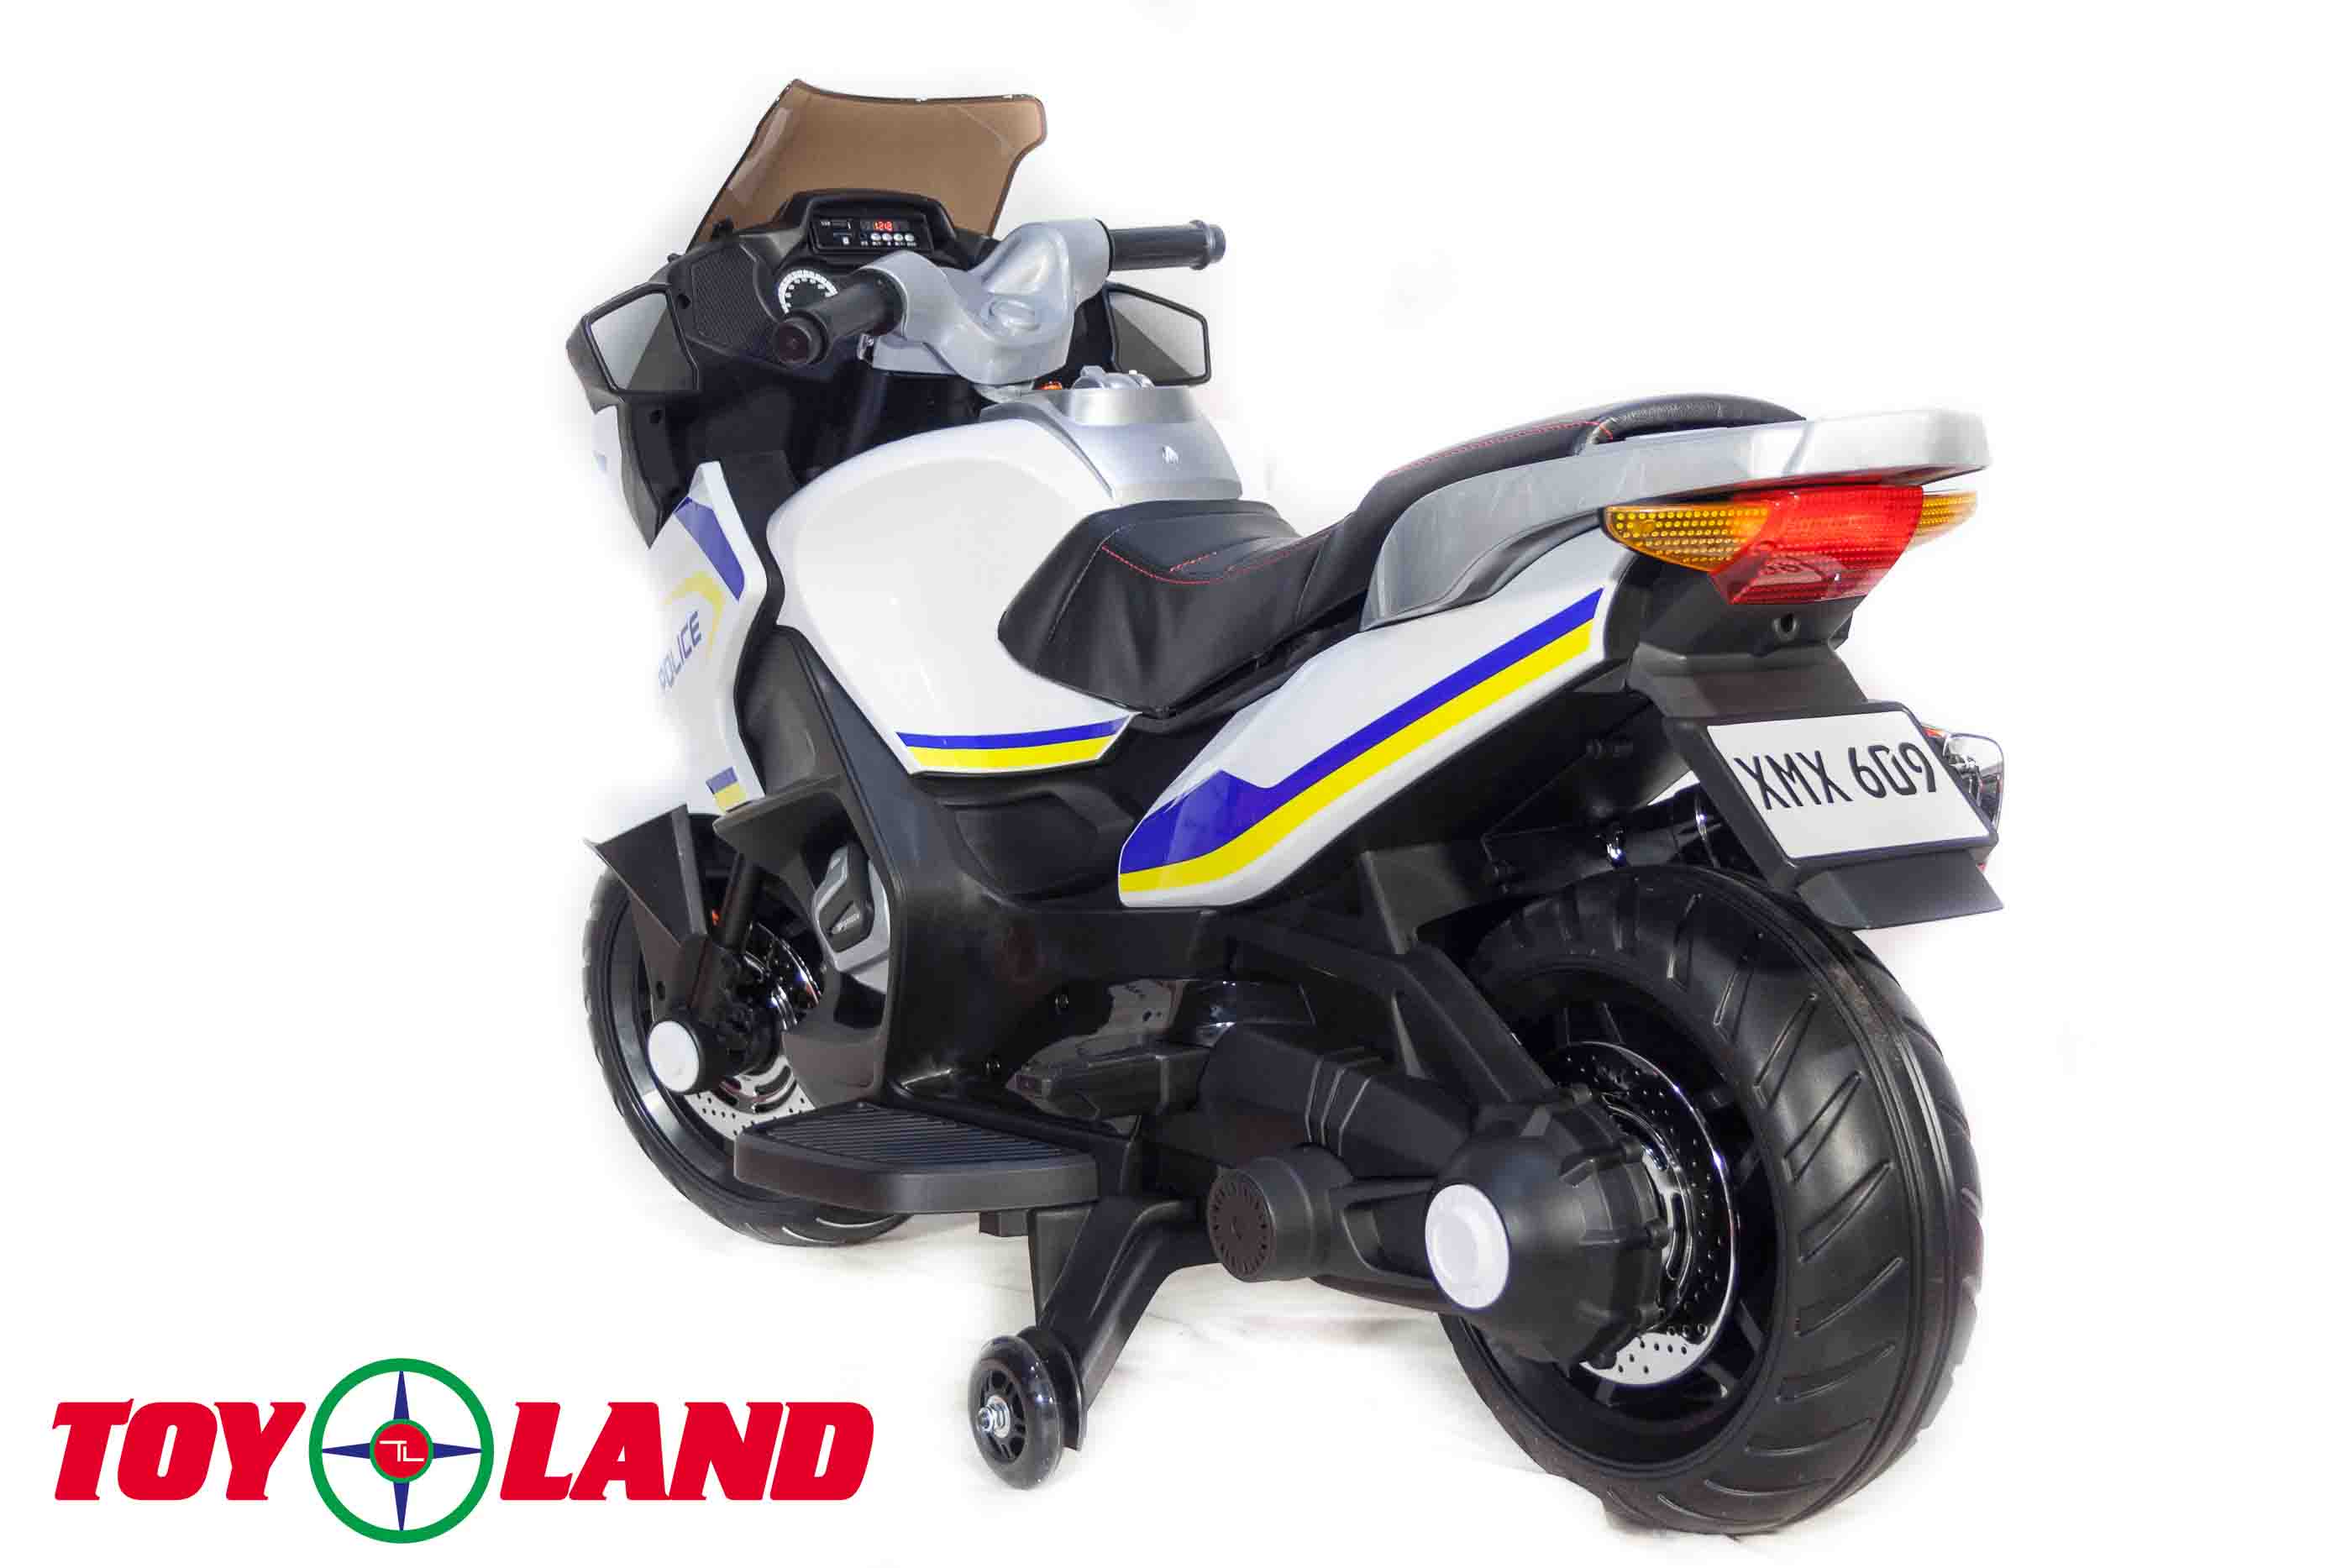 Мотоцикл Moto New ХМХ 609, полиция, свет и звук  